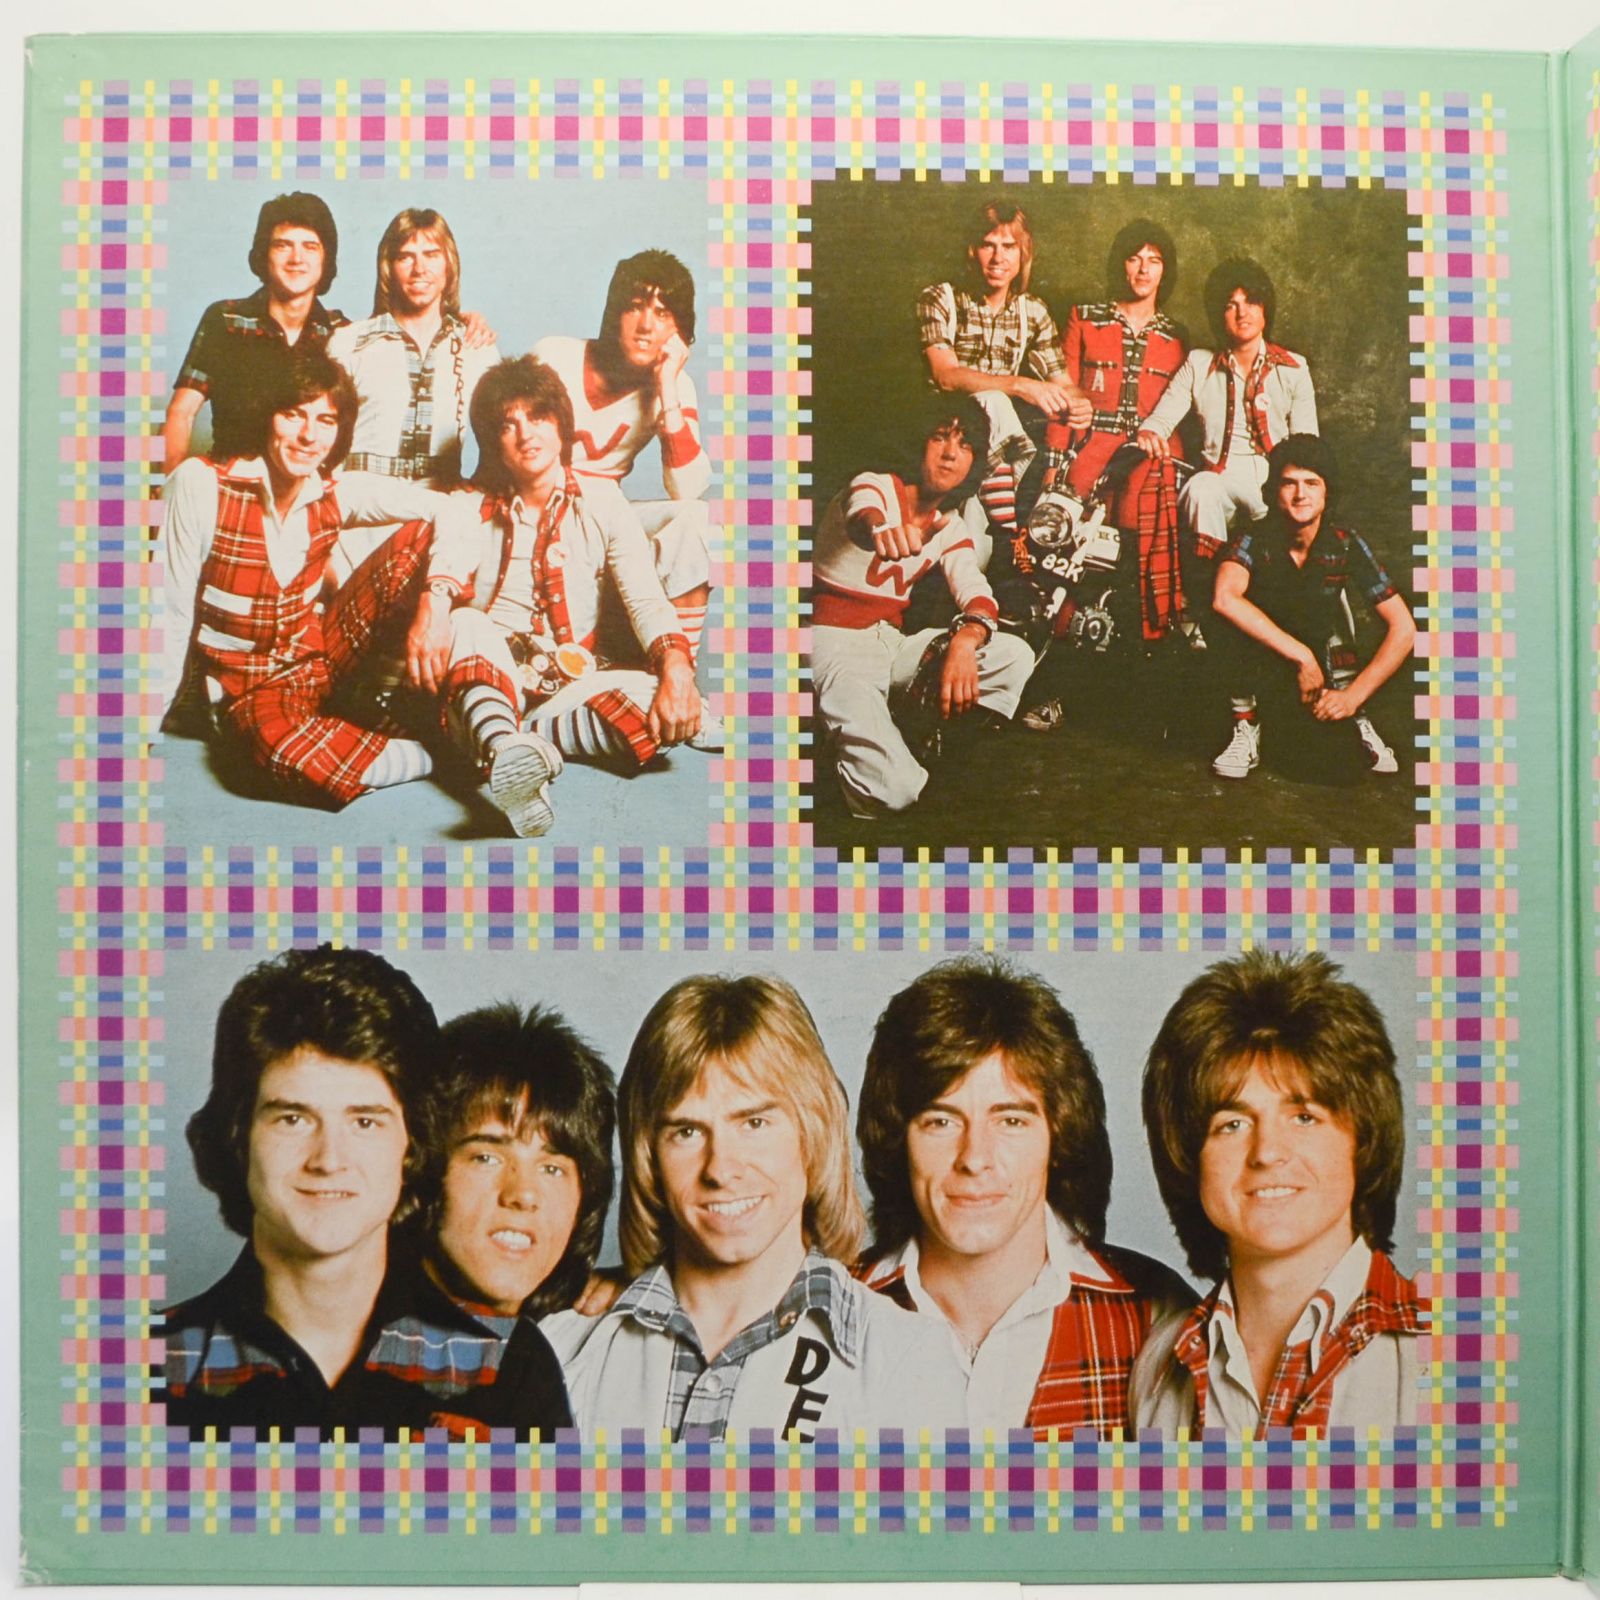 Bay City Rollers — Rock N' Roll Love Letter, 1976